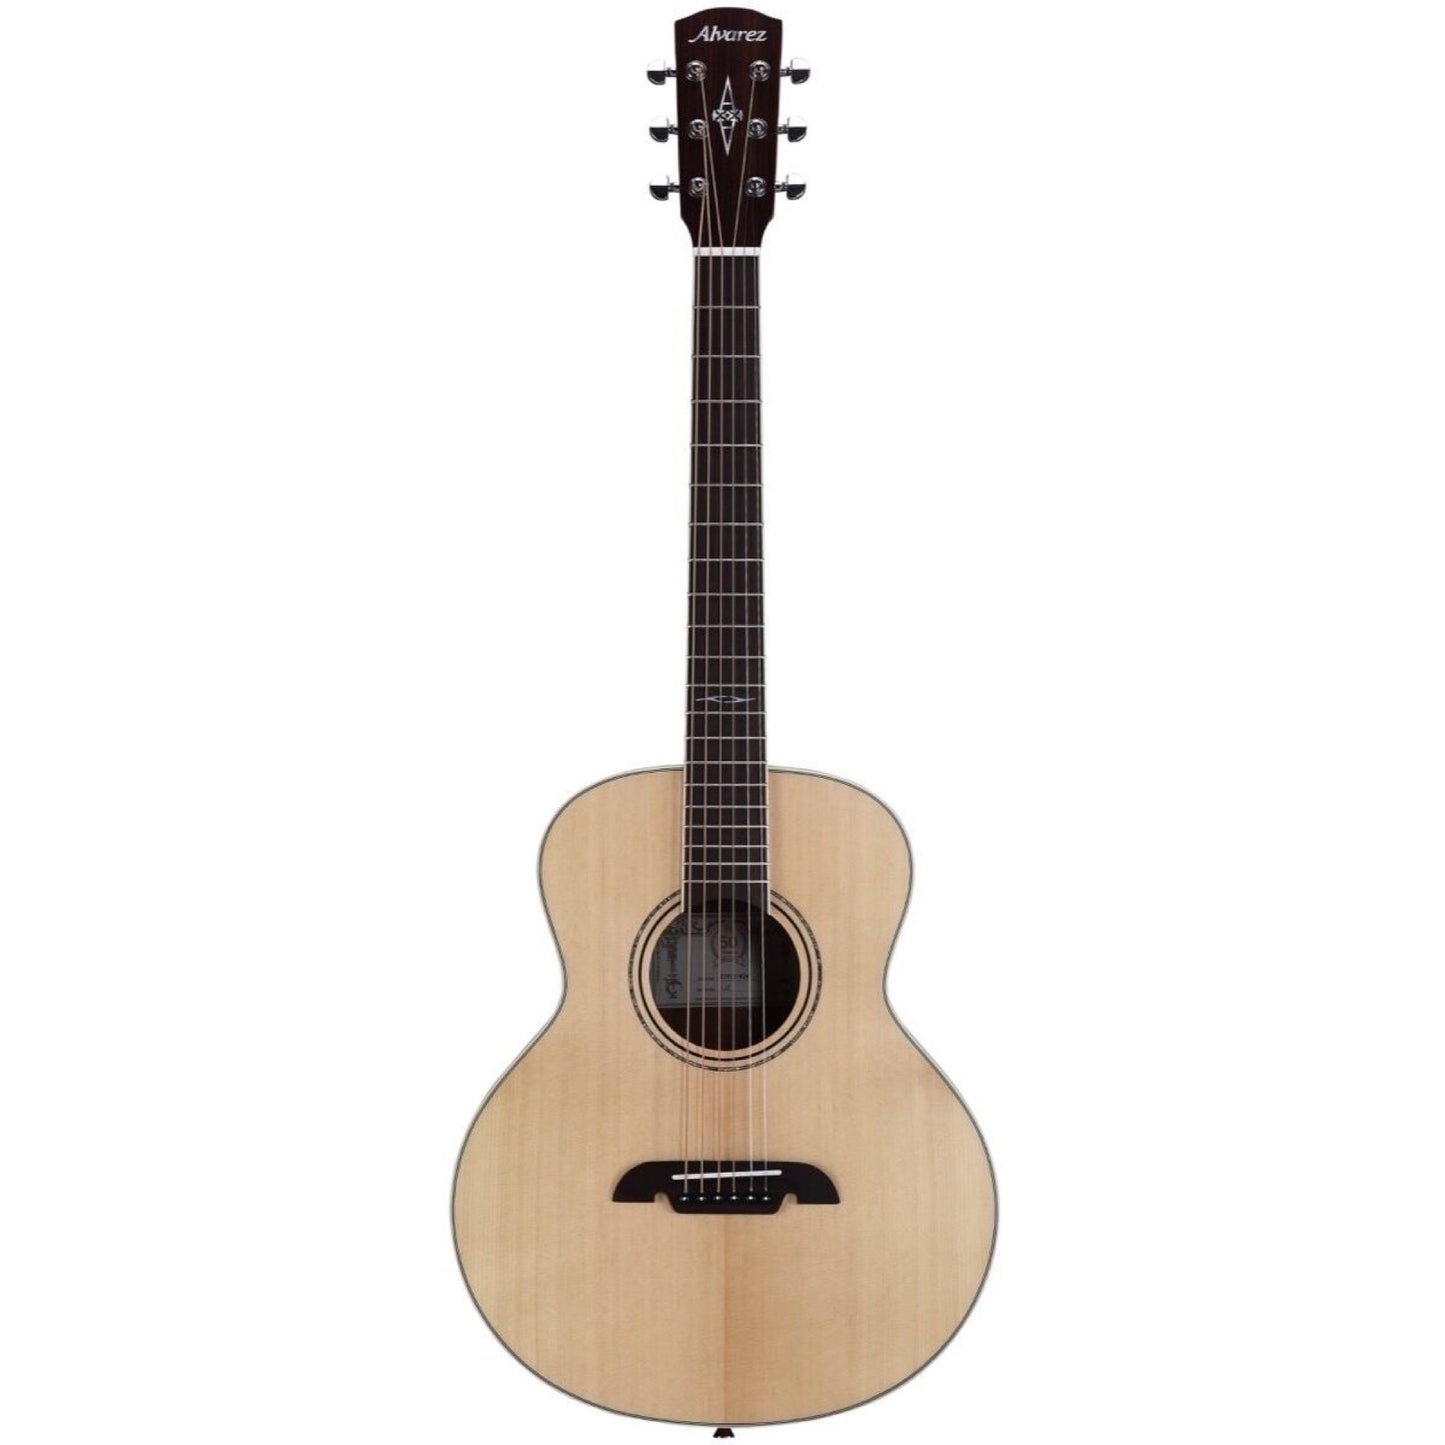 Alvarez LJ2 Little Jumbo Acoustic Guitar (with Gig Bag)